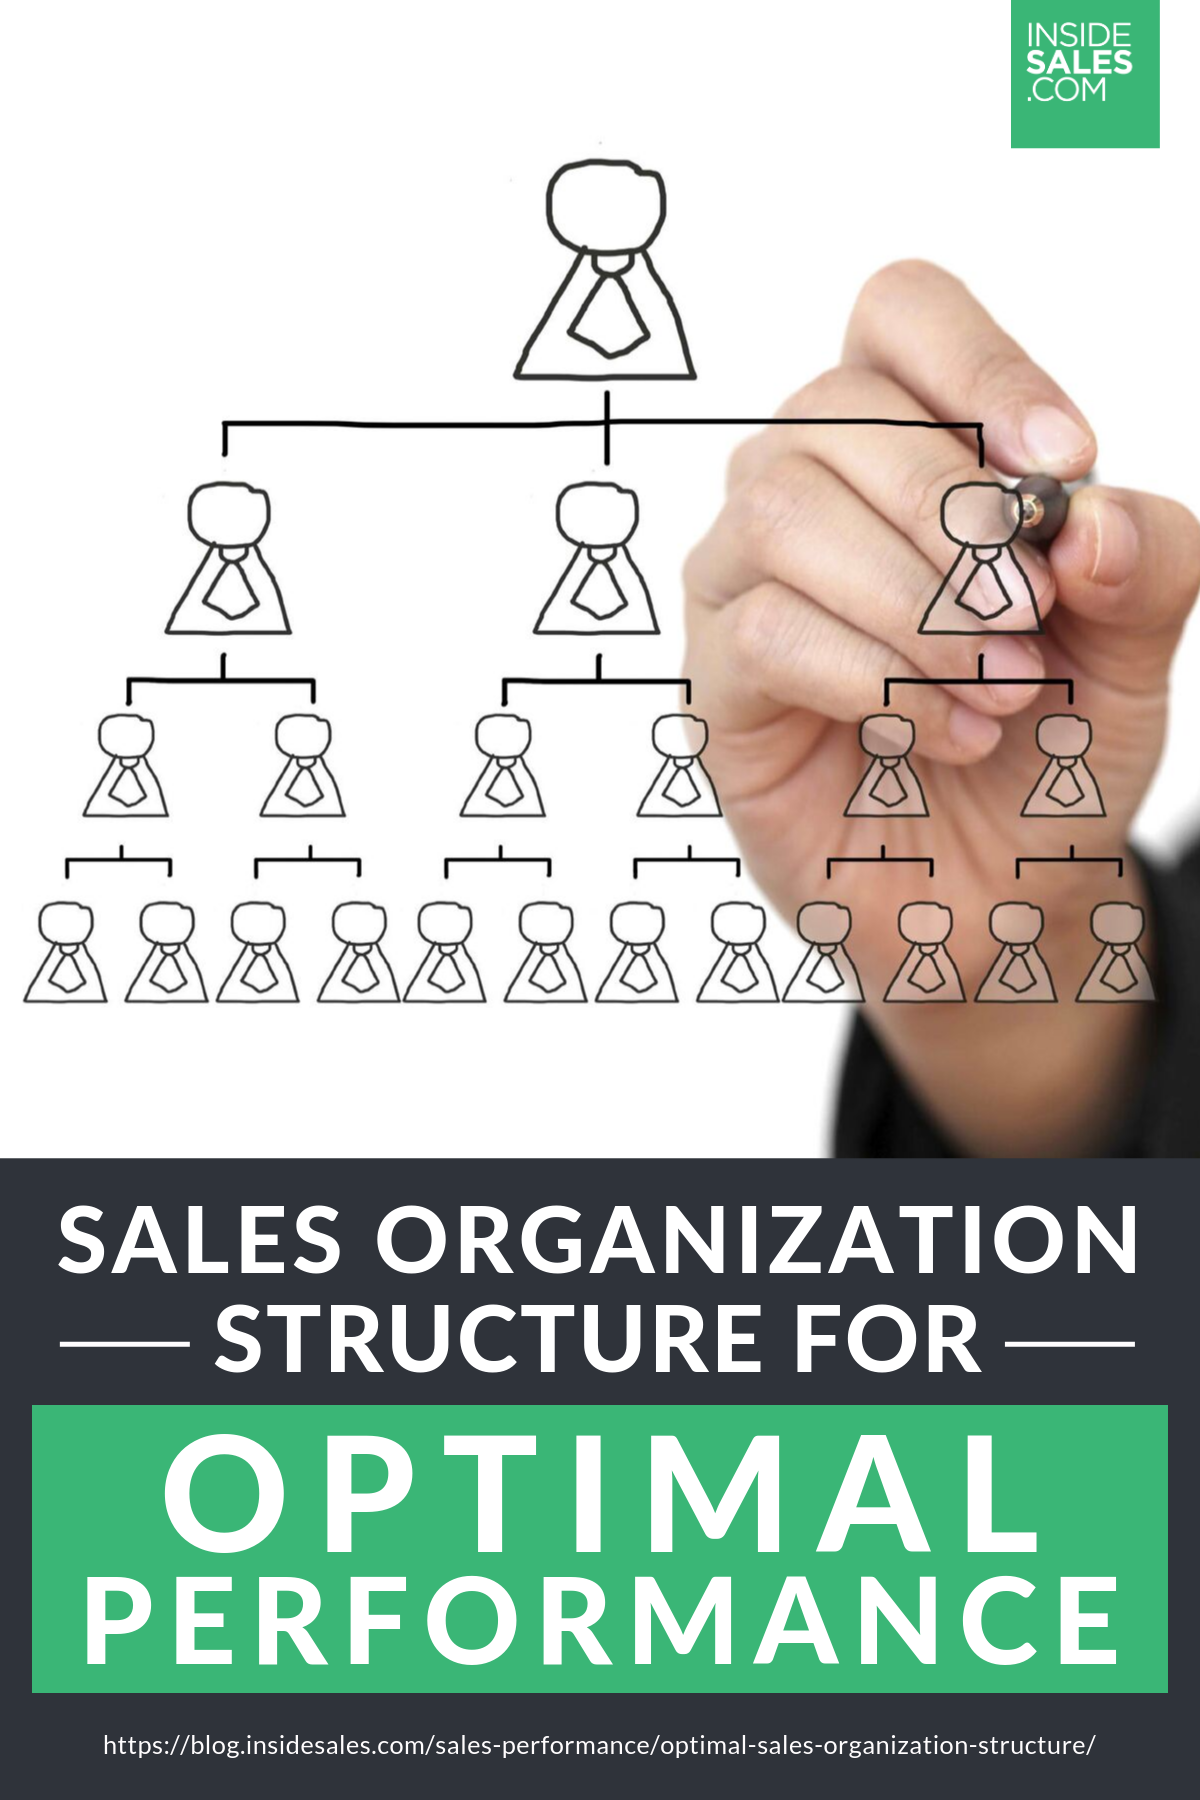 Sales Organization Structure For Optimal Performance https://www.insidesales.com/blog/sales-performance/optimal-sales-organization-structure/